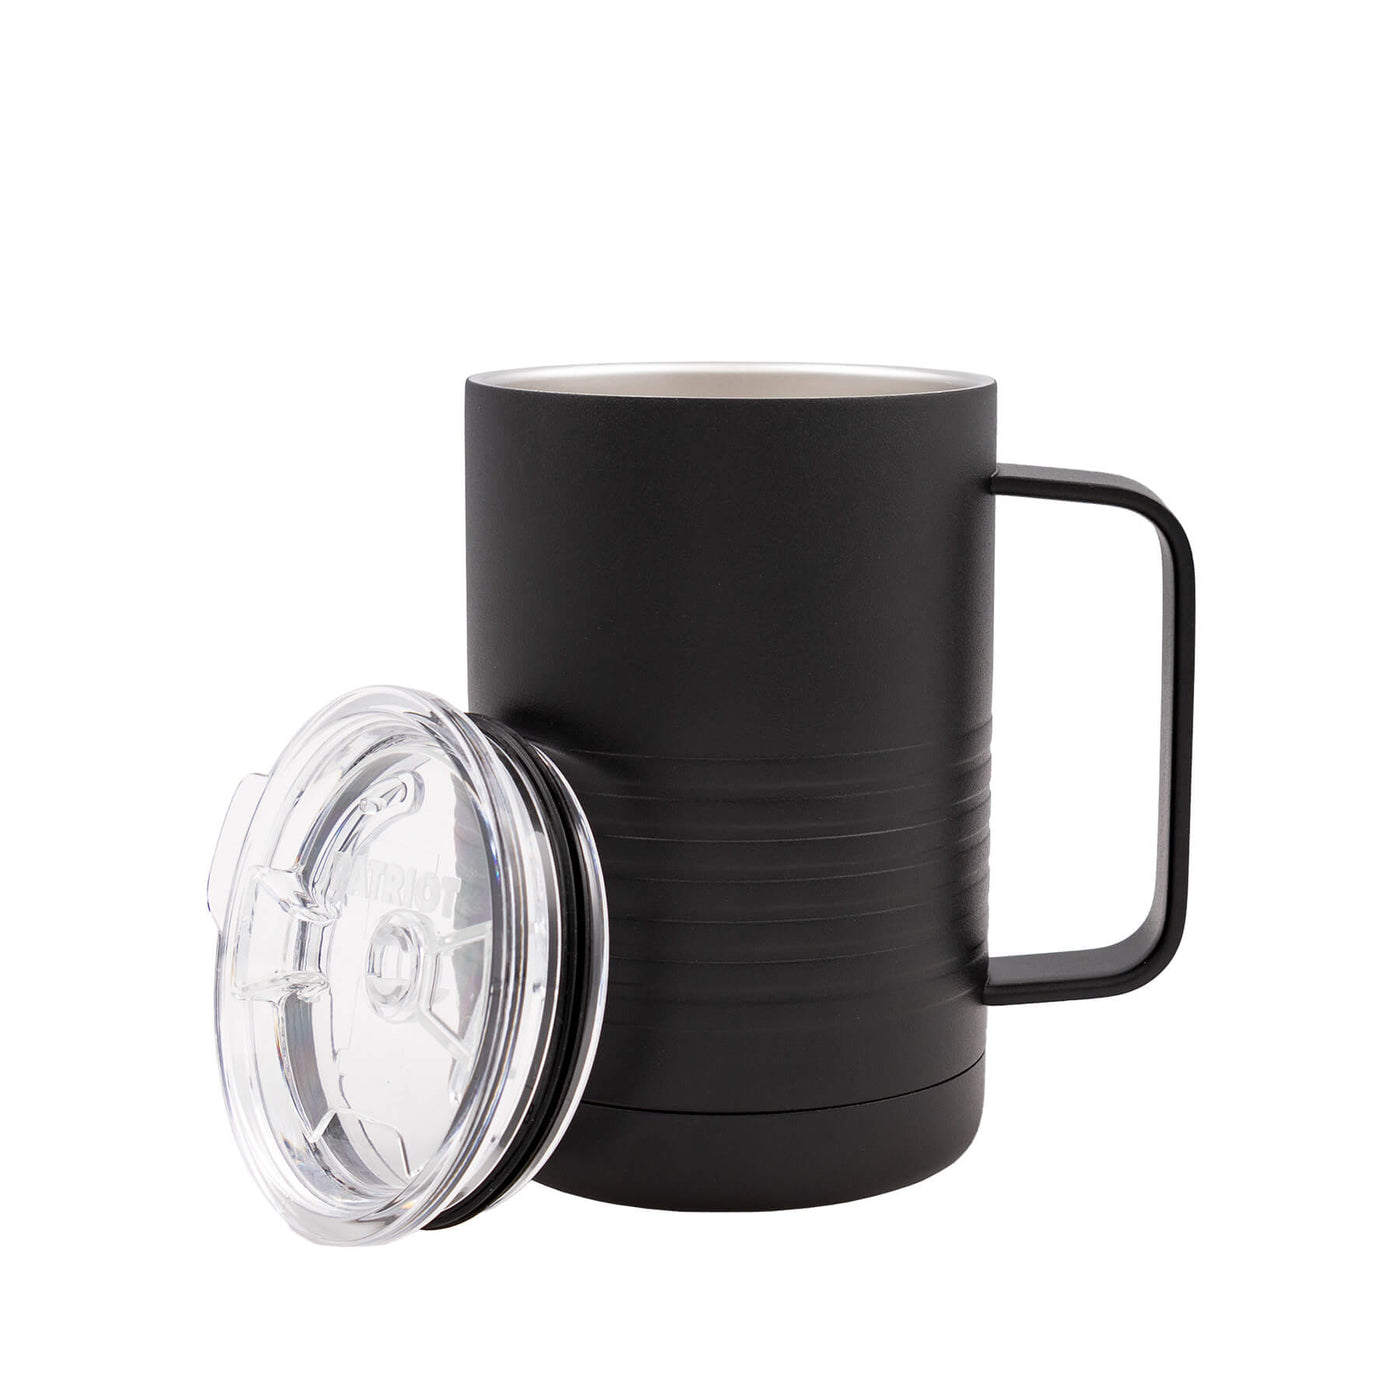 Infinite Mug - 16 Oz Coffee Mug - Insulated Ceramic Coffee Mug